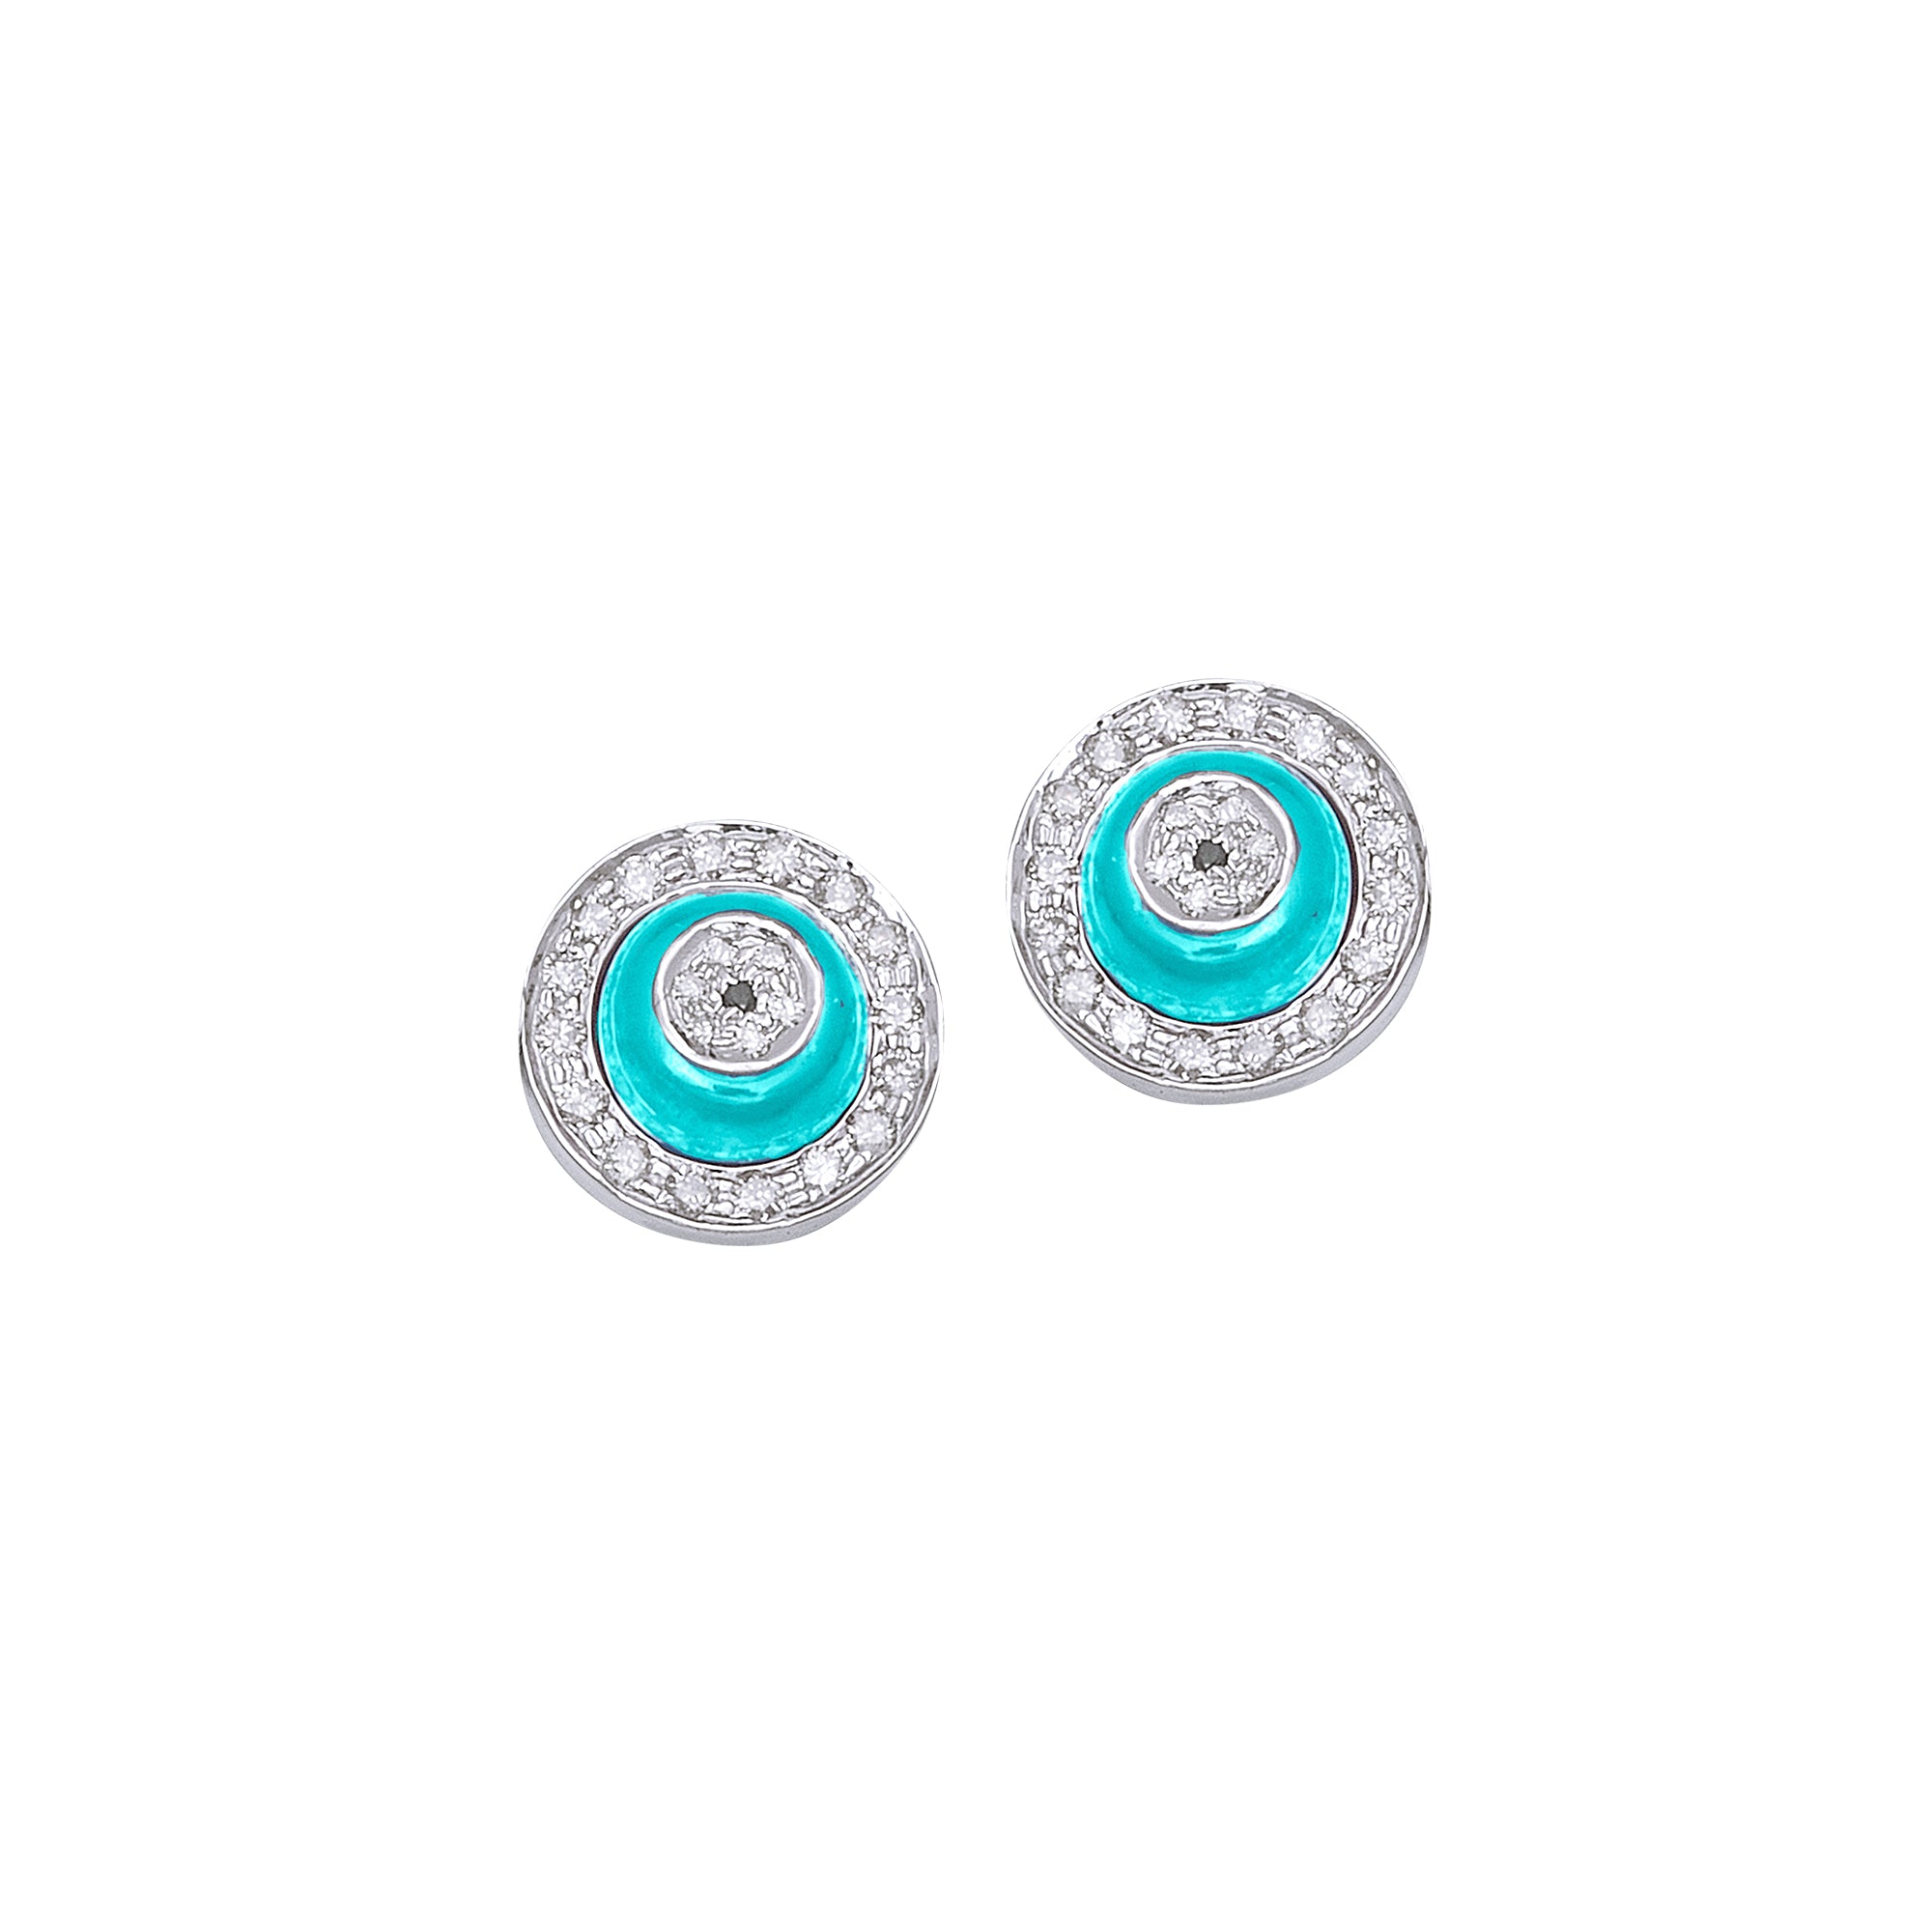 Tiffany Soleste earrings in platinum with round brilliant diamonds   Tiffany  Co